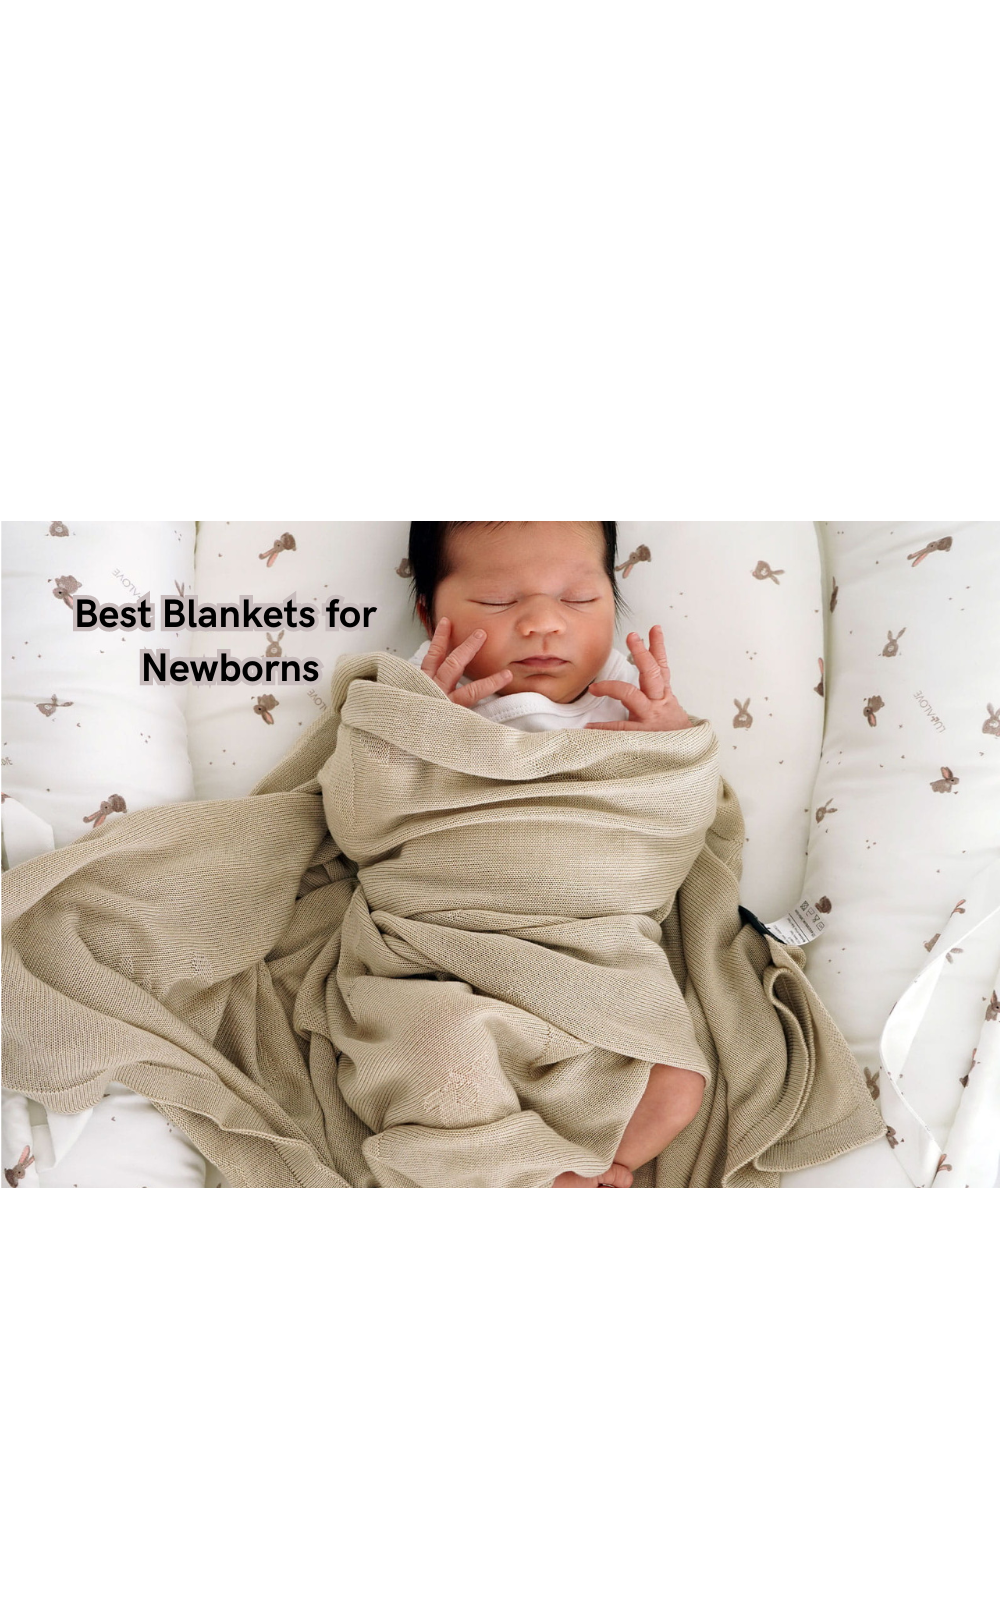 From Swaddles to Sleepsacks: The Best Blankets for Newborns